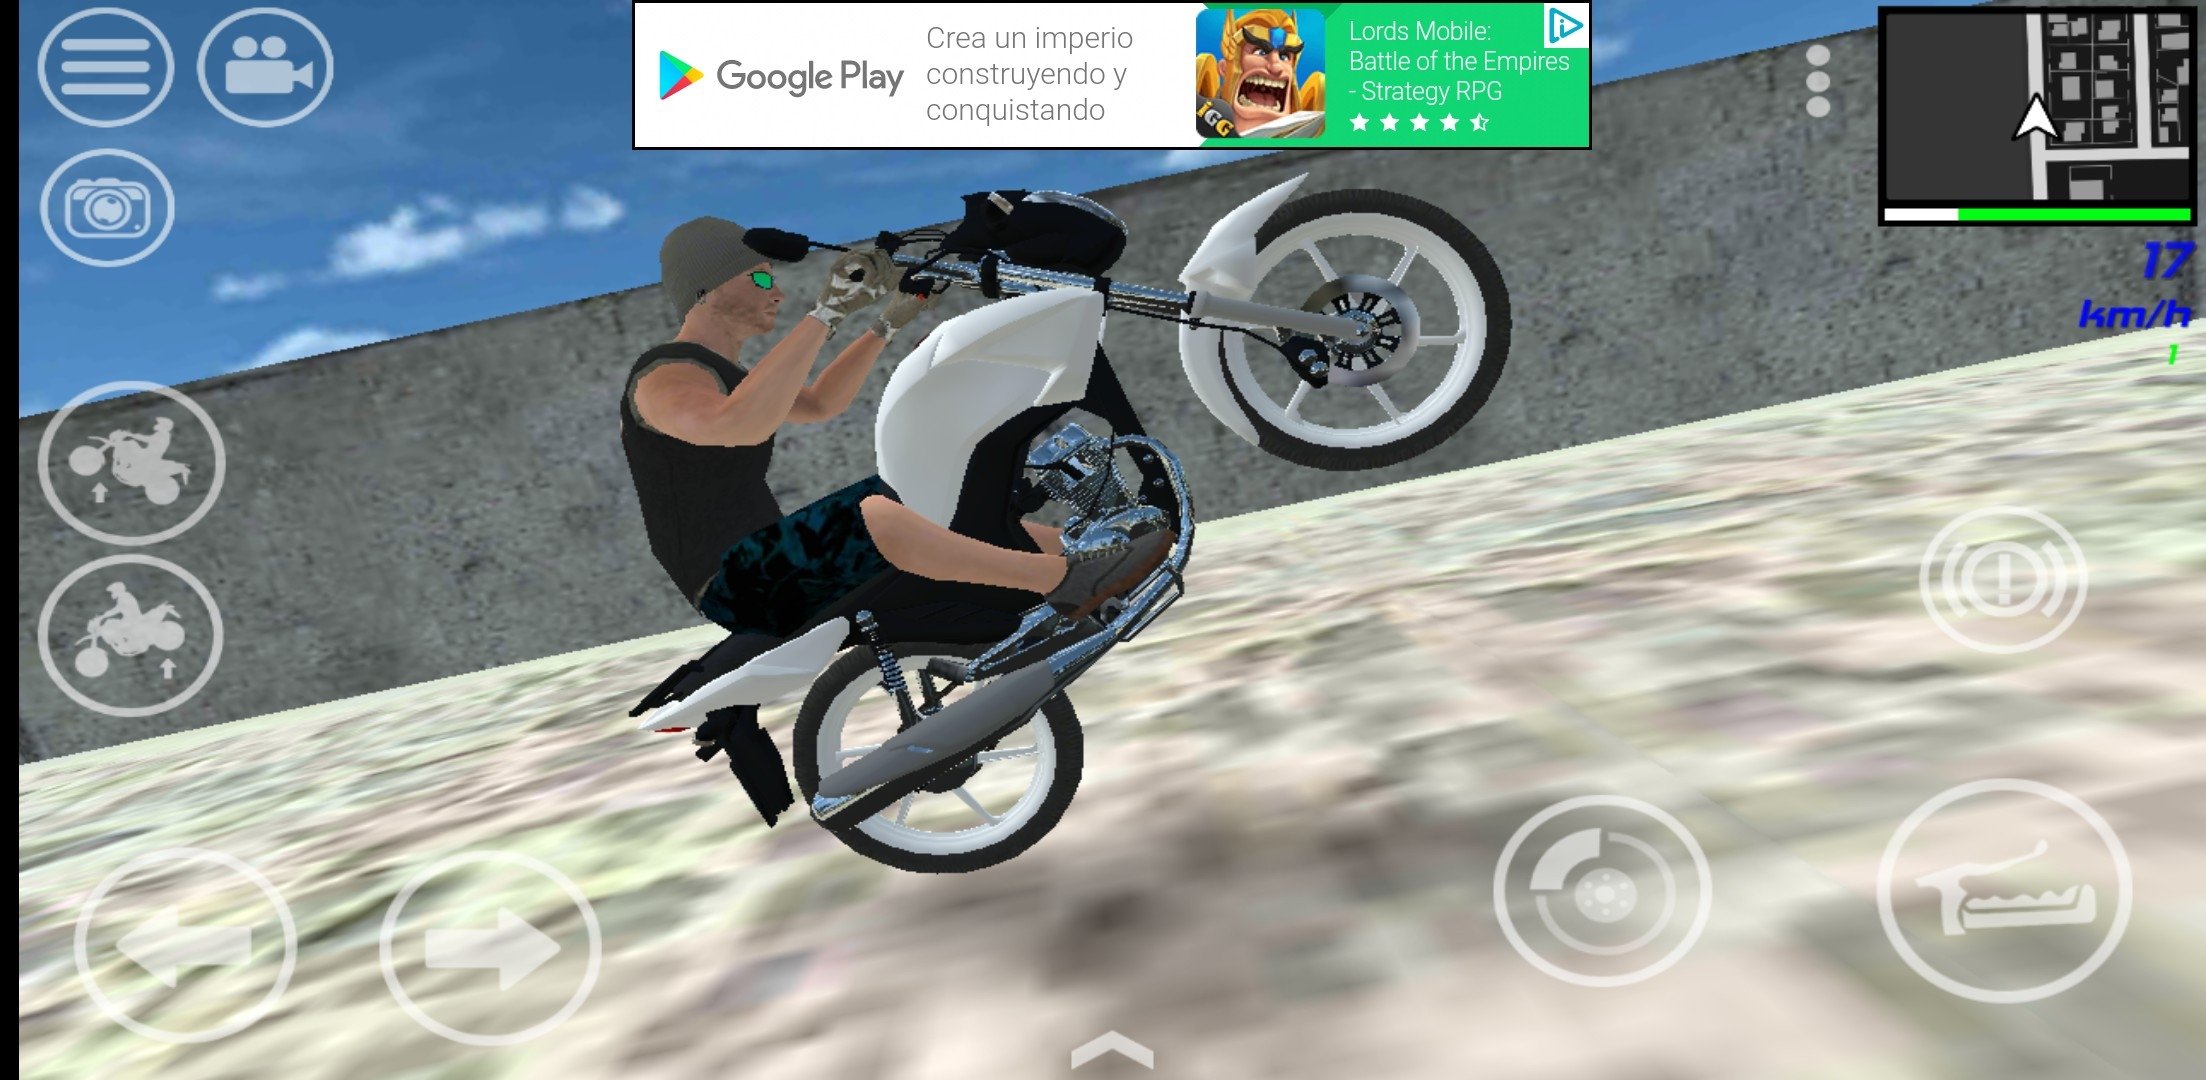 Motos Vlog no Grau Brasil – Apps on Google Play